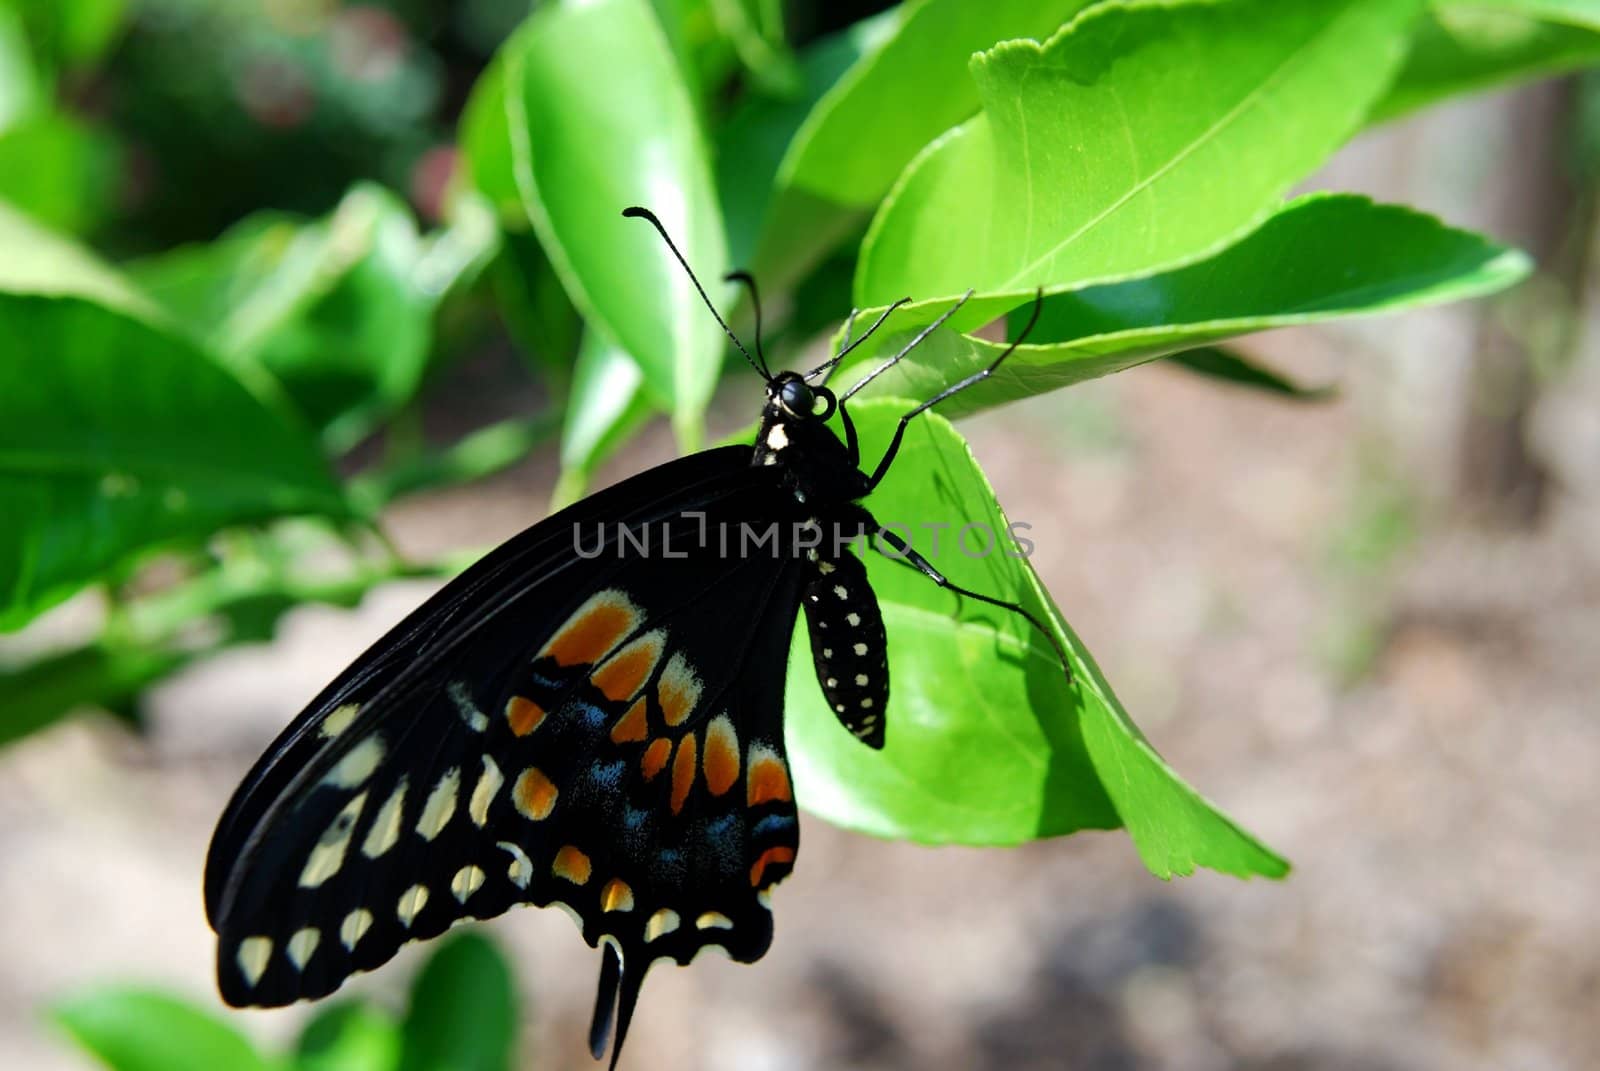 eastern black swallowtail butterfly on a leave